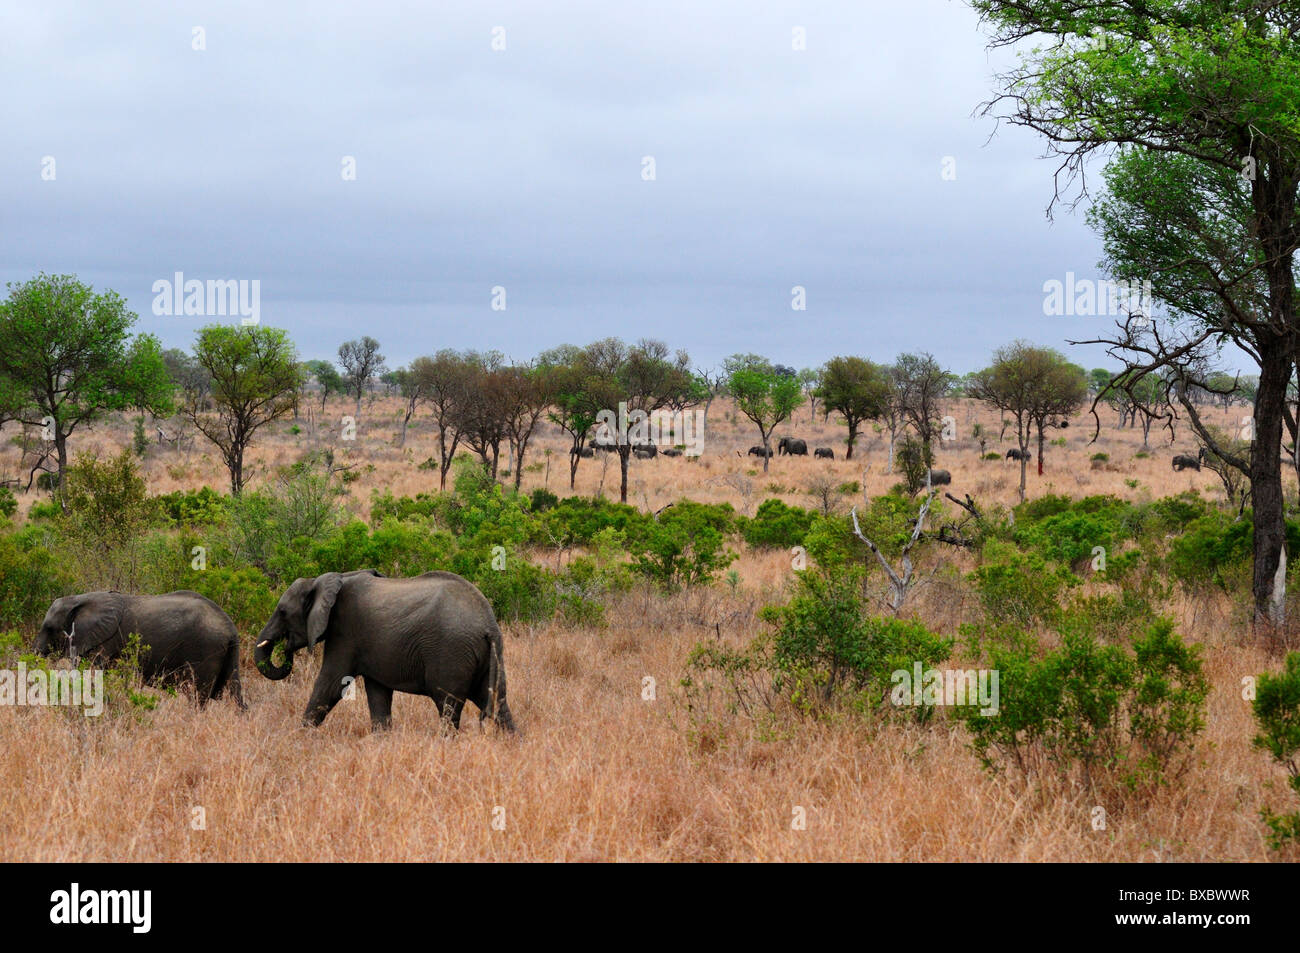 A herd of elephants matching across Africa savanna. Kruger National Park, South Africa. Stock Photo